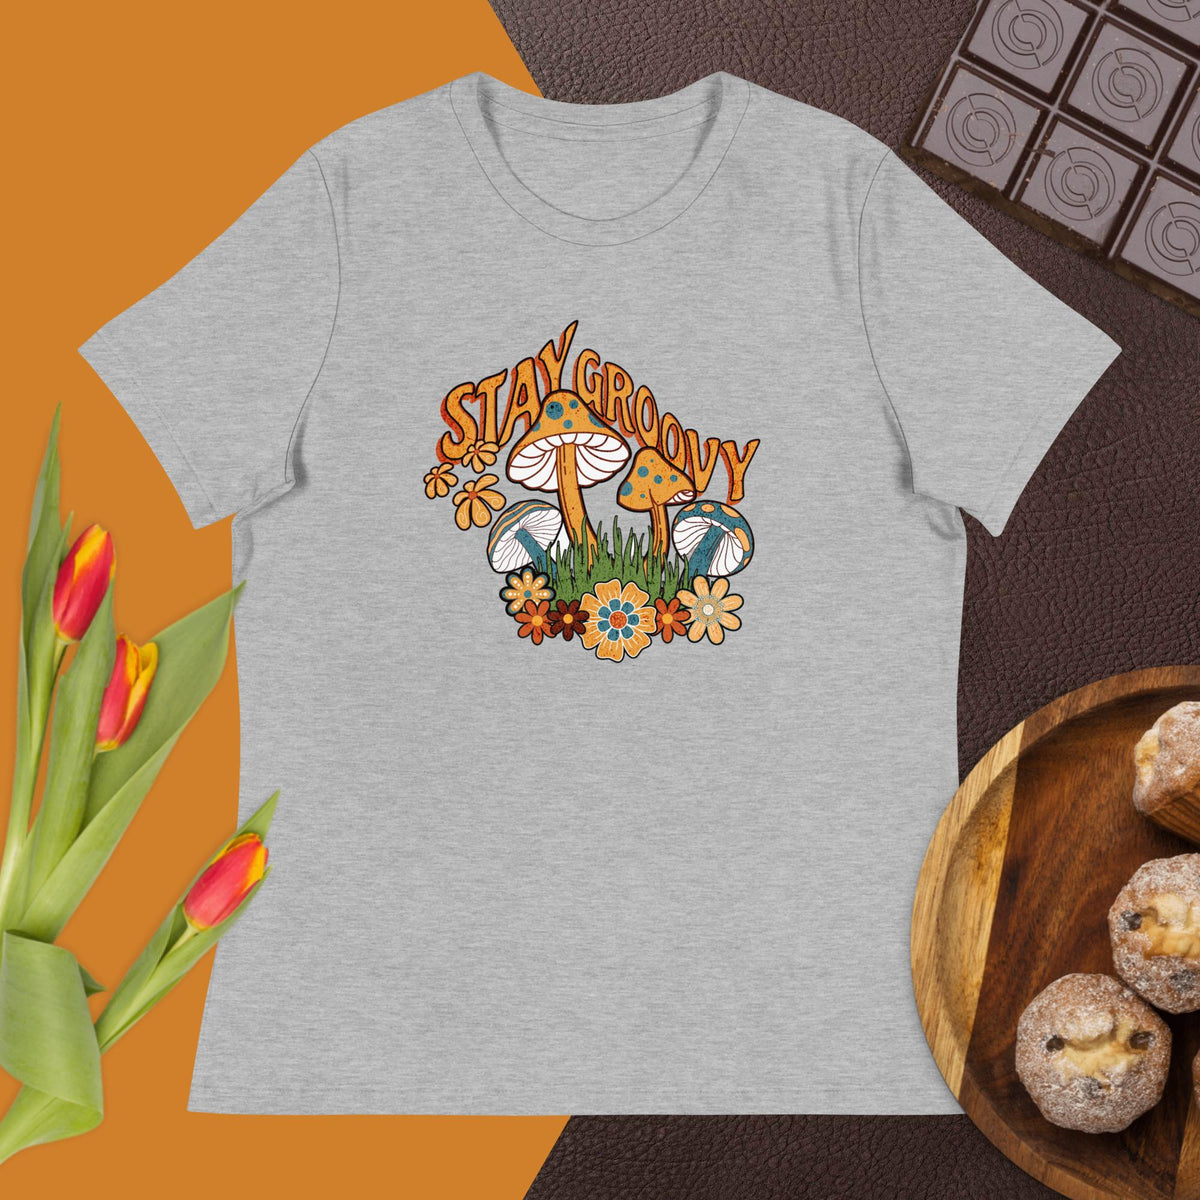 Stay Groovy Mushroom T-Shirts